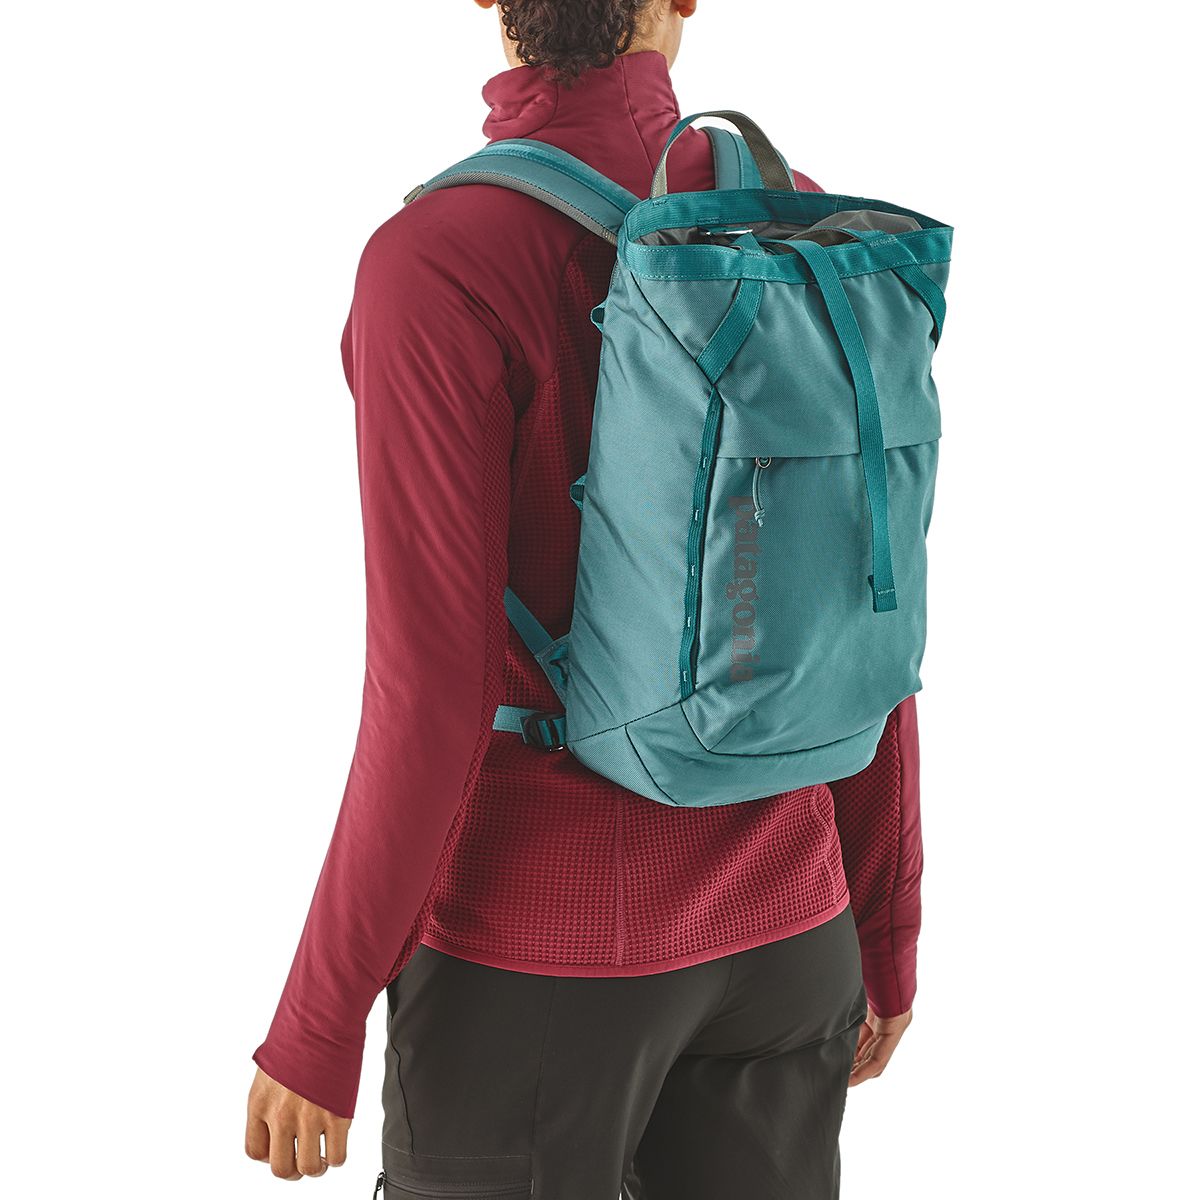 Patagonia Linked Pack 18L Backpack - Hike & Camp